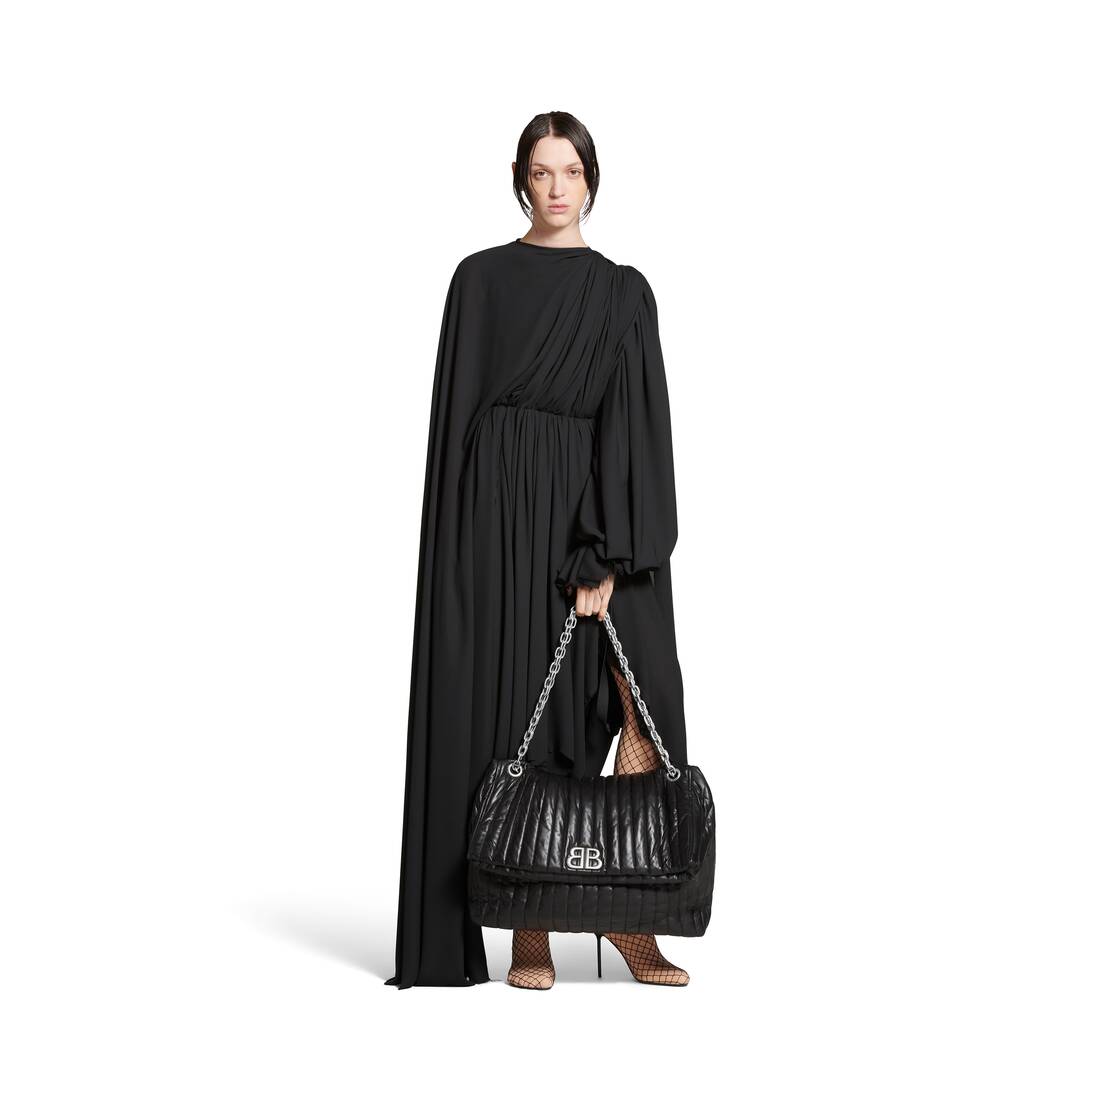 Balenciaga Monaco Medium Quilted Chain Shoulder Bag - Black/Silver